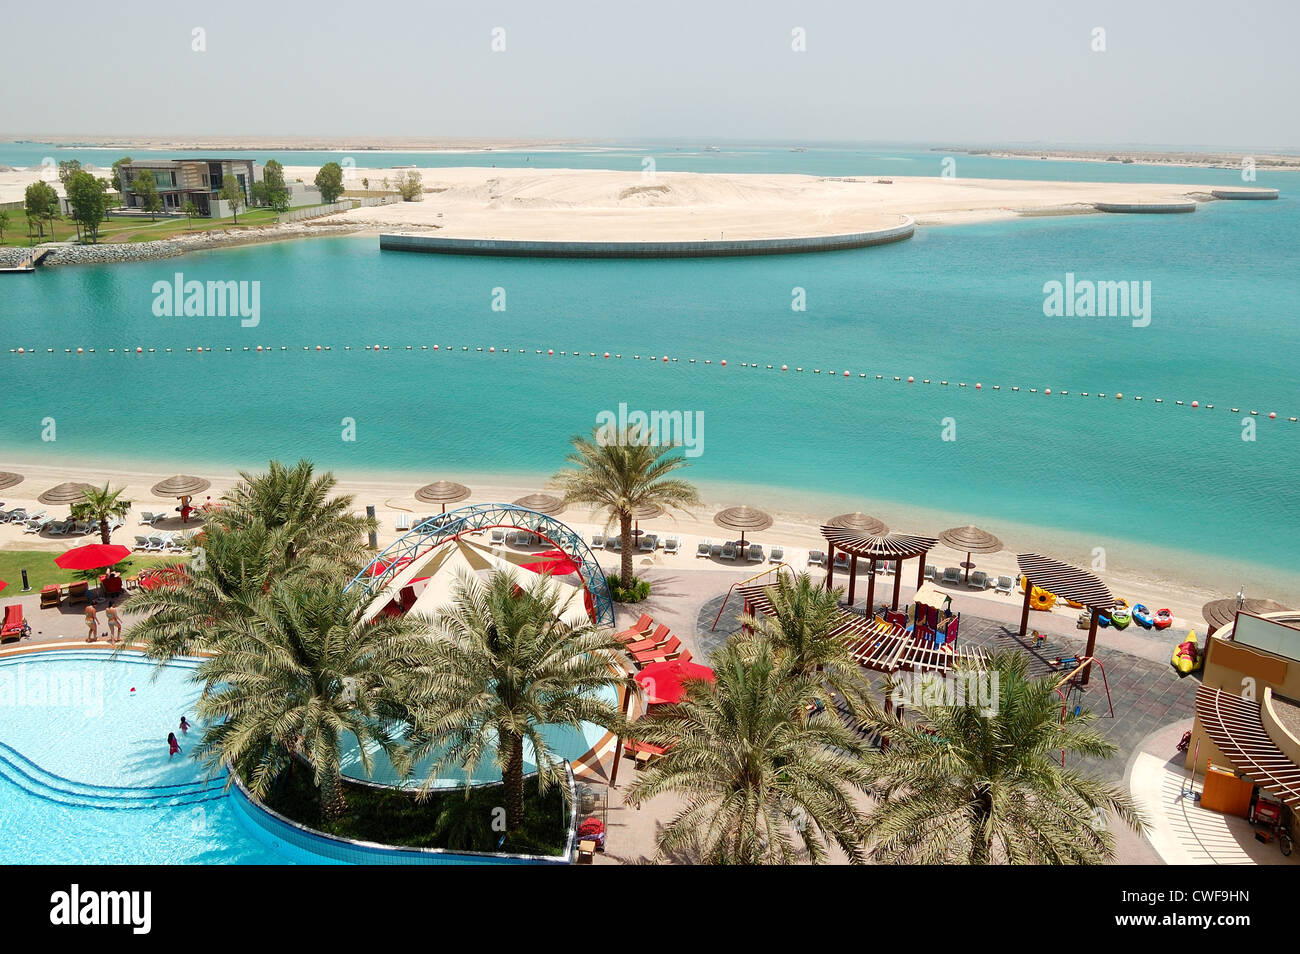 The beach of the luxury hotel, Abu Dhabi, UAE Stock Photo